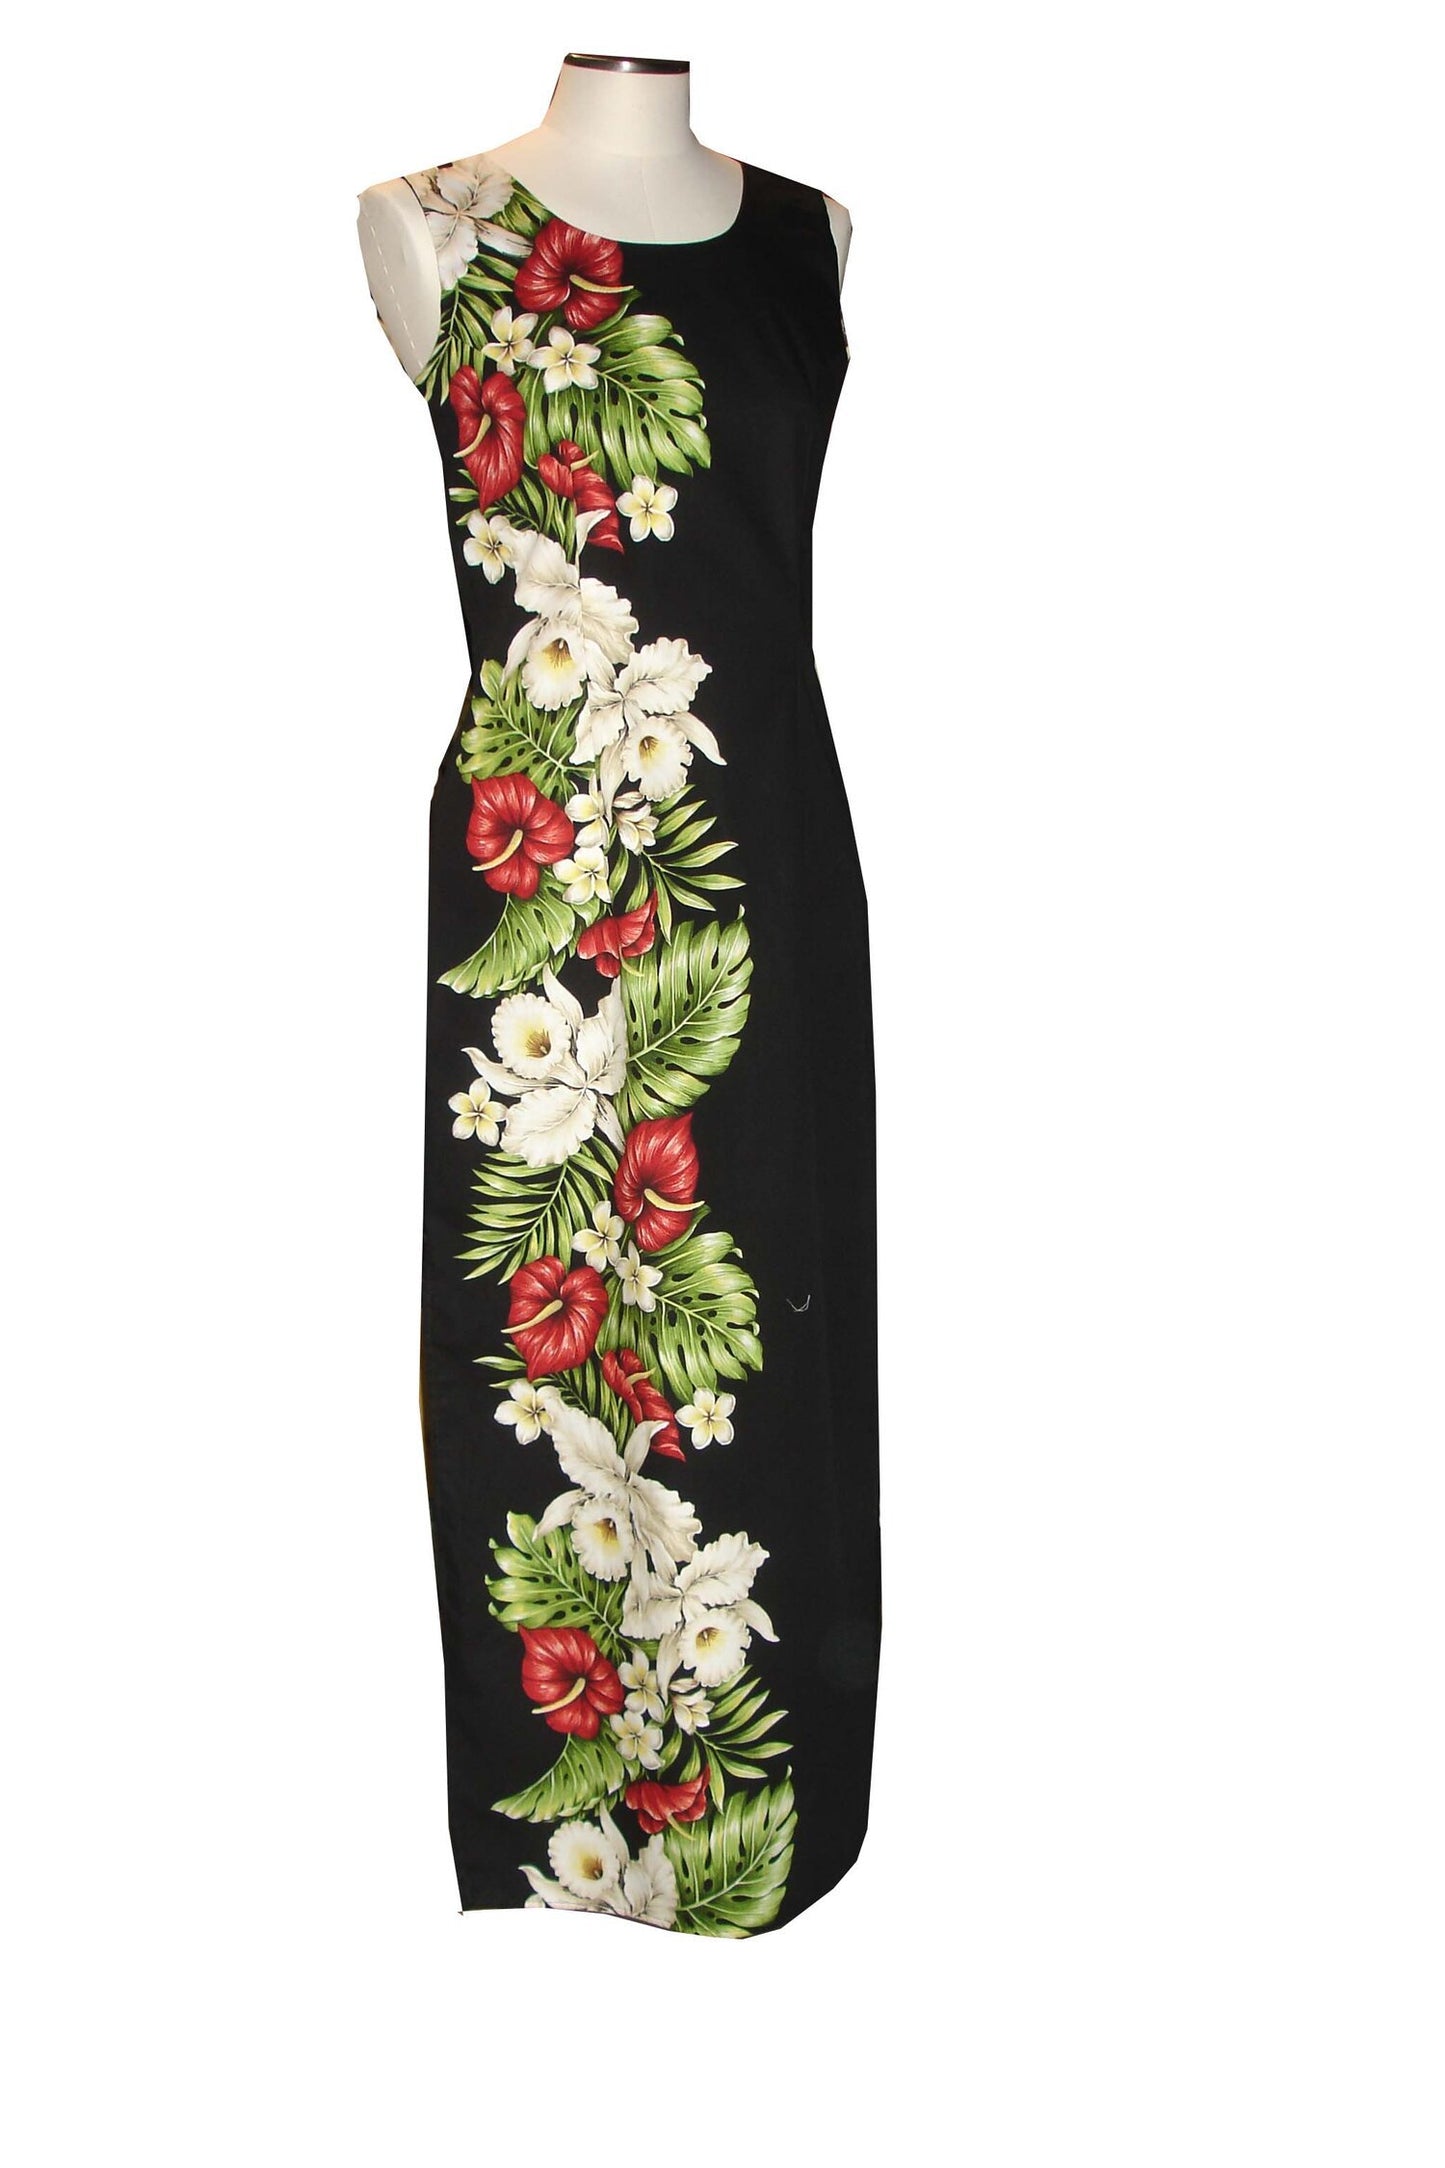 Kona Tropical Flowers Border Design Long Tank Dress 100% Cotton